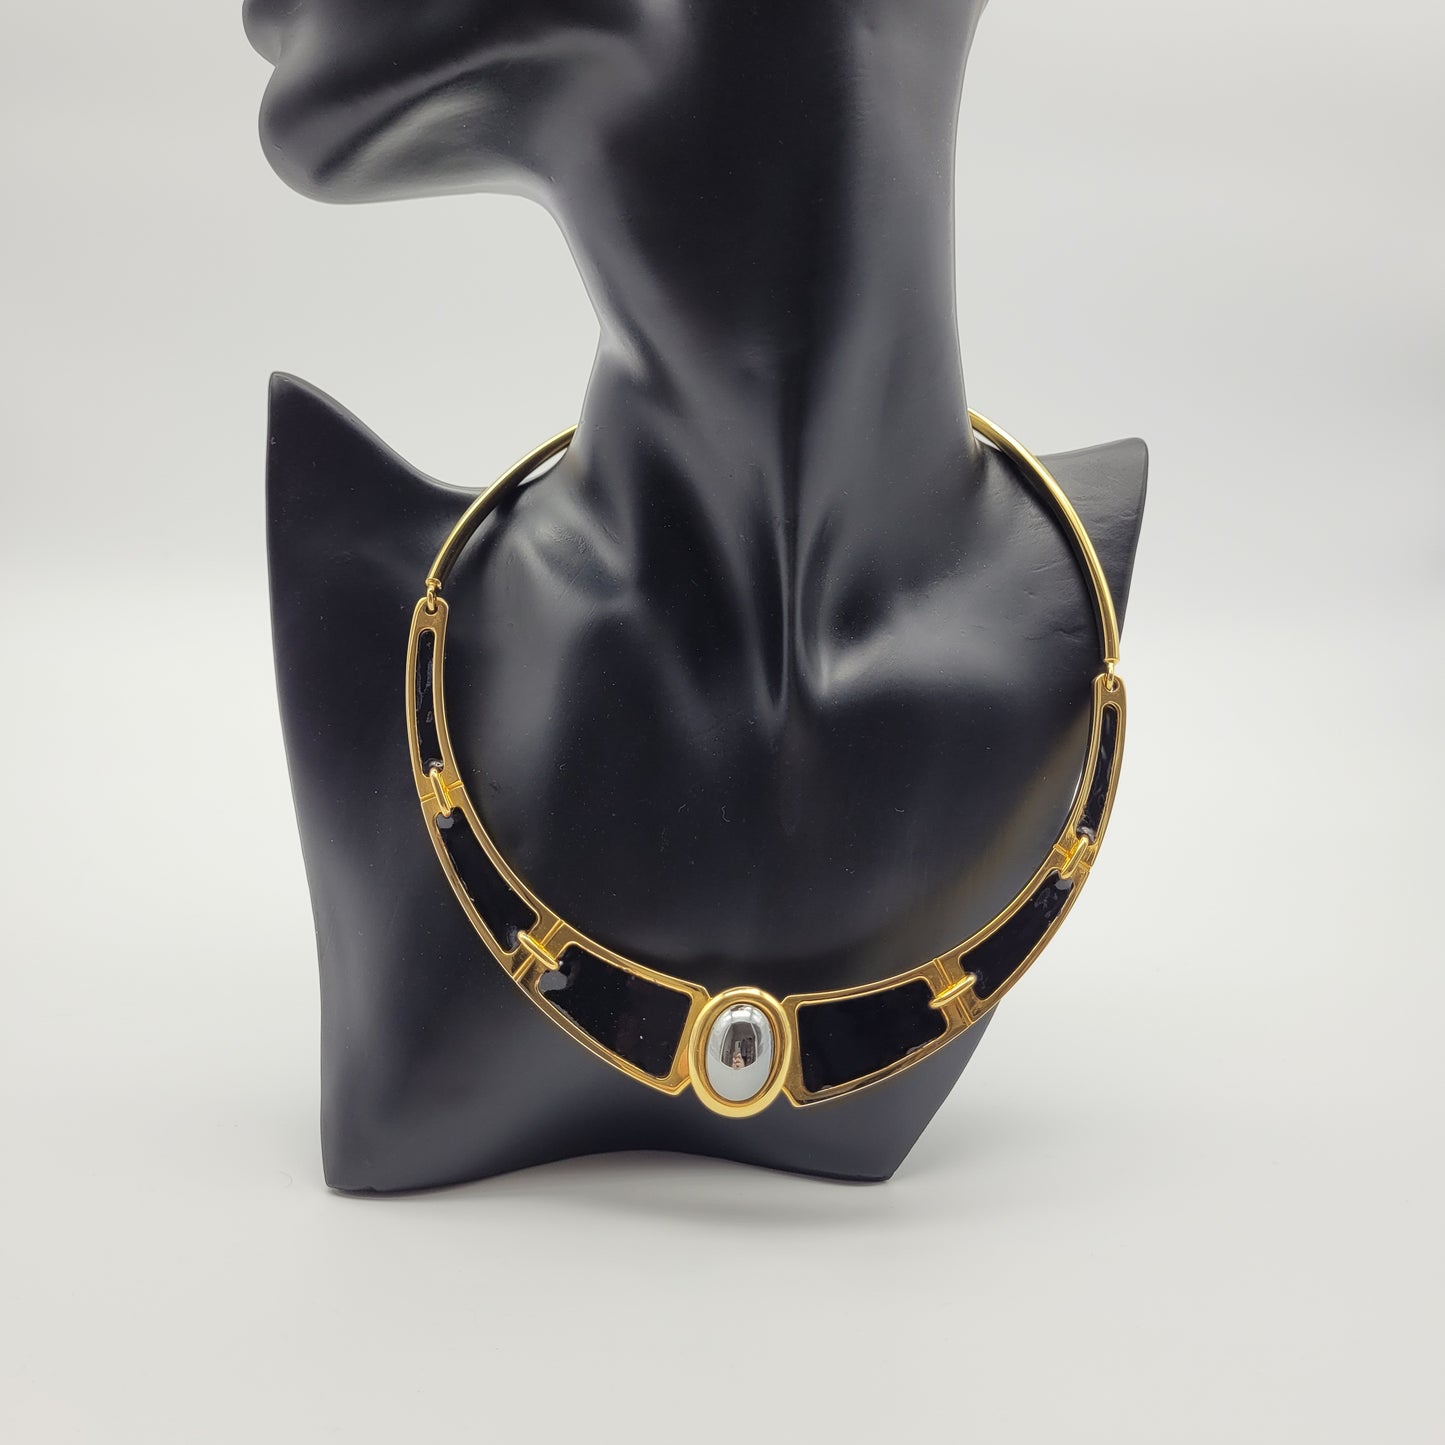 Vintage collar necklace Charles Jourdan